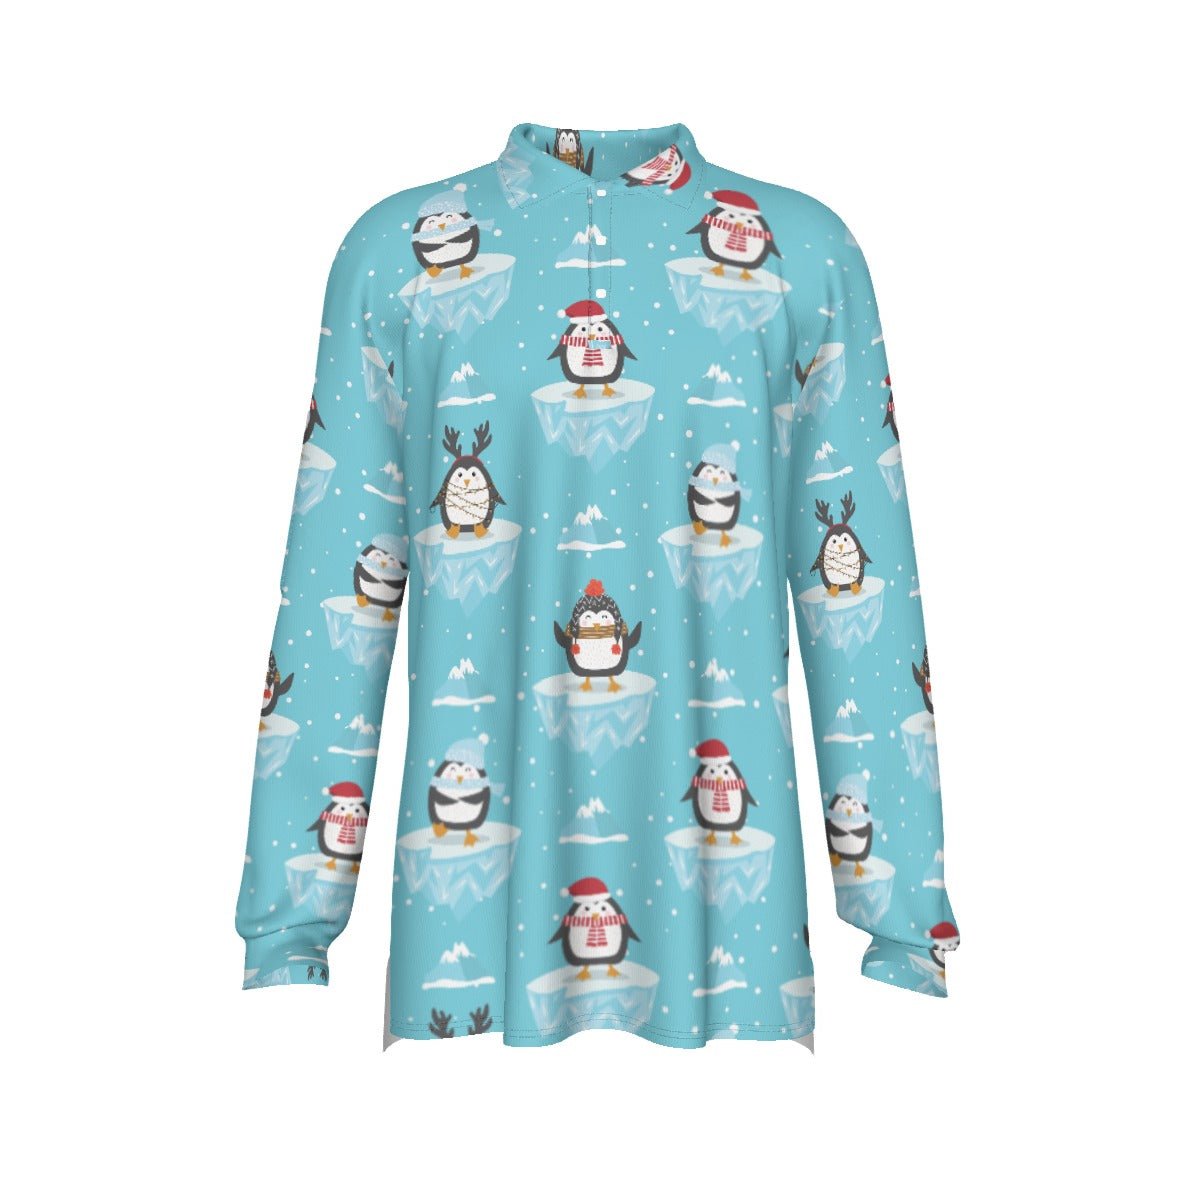 Men's Long Sleeve Christmas Polo Shirt - Icy Penguins - Festive Style